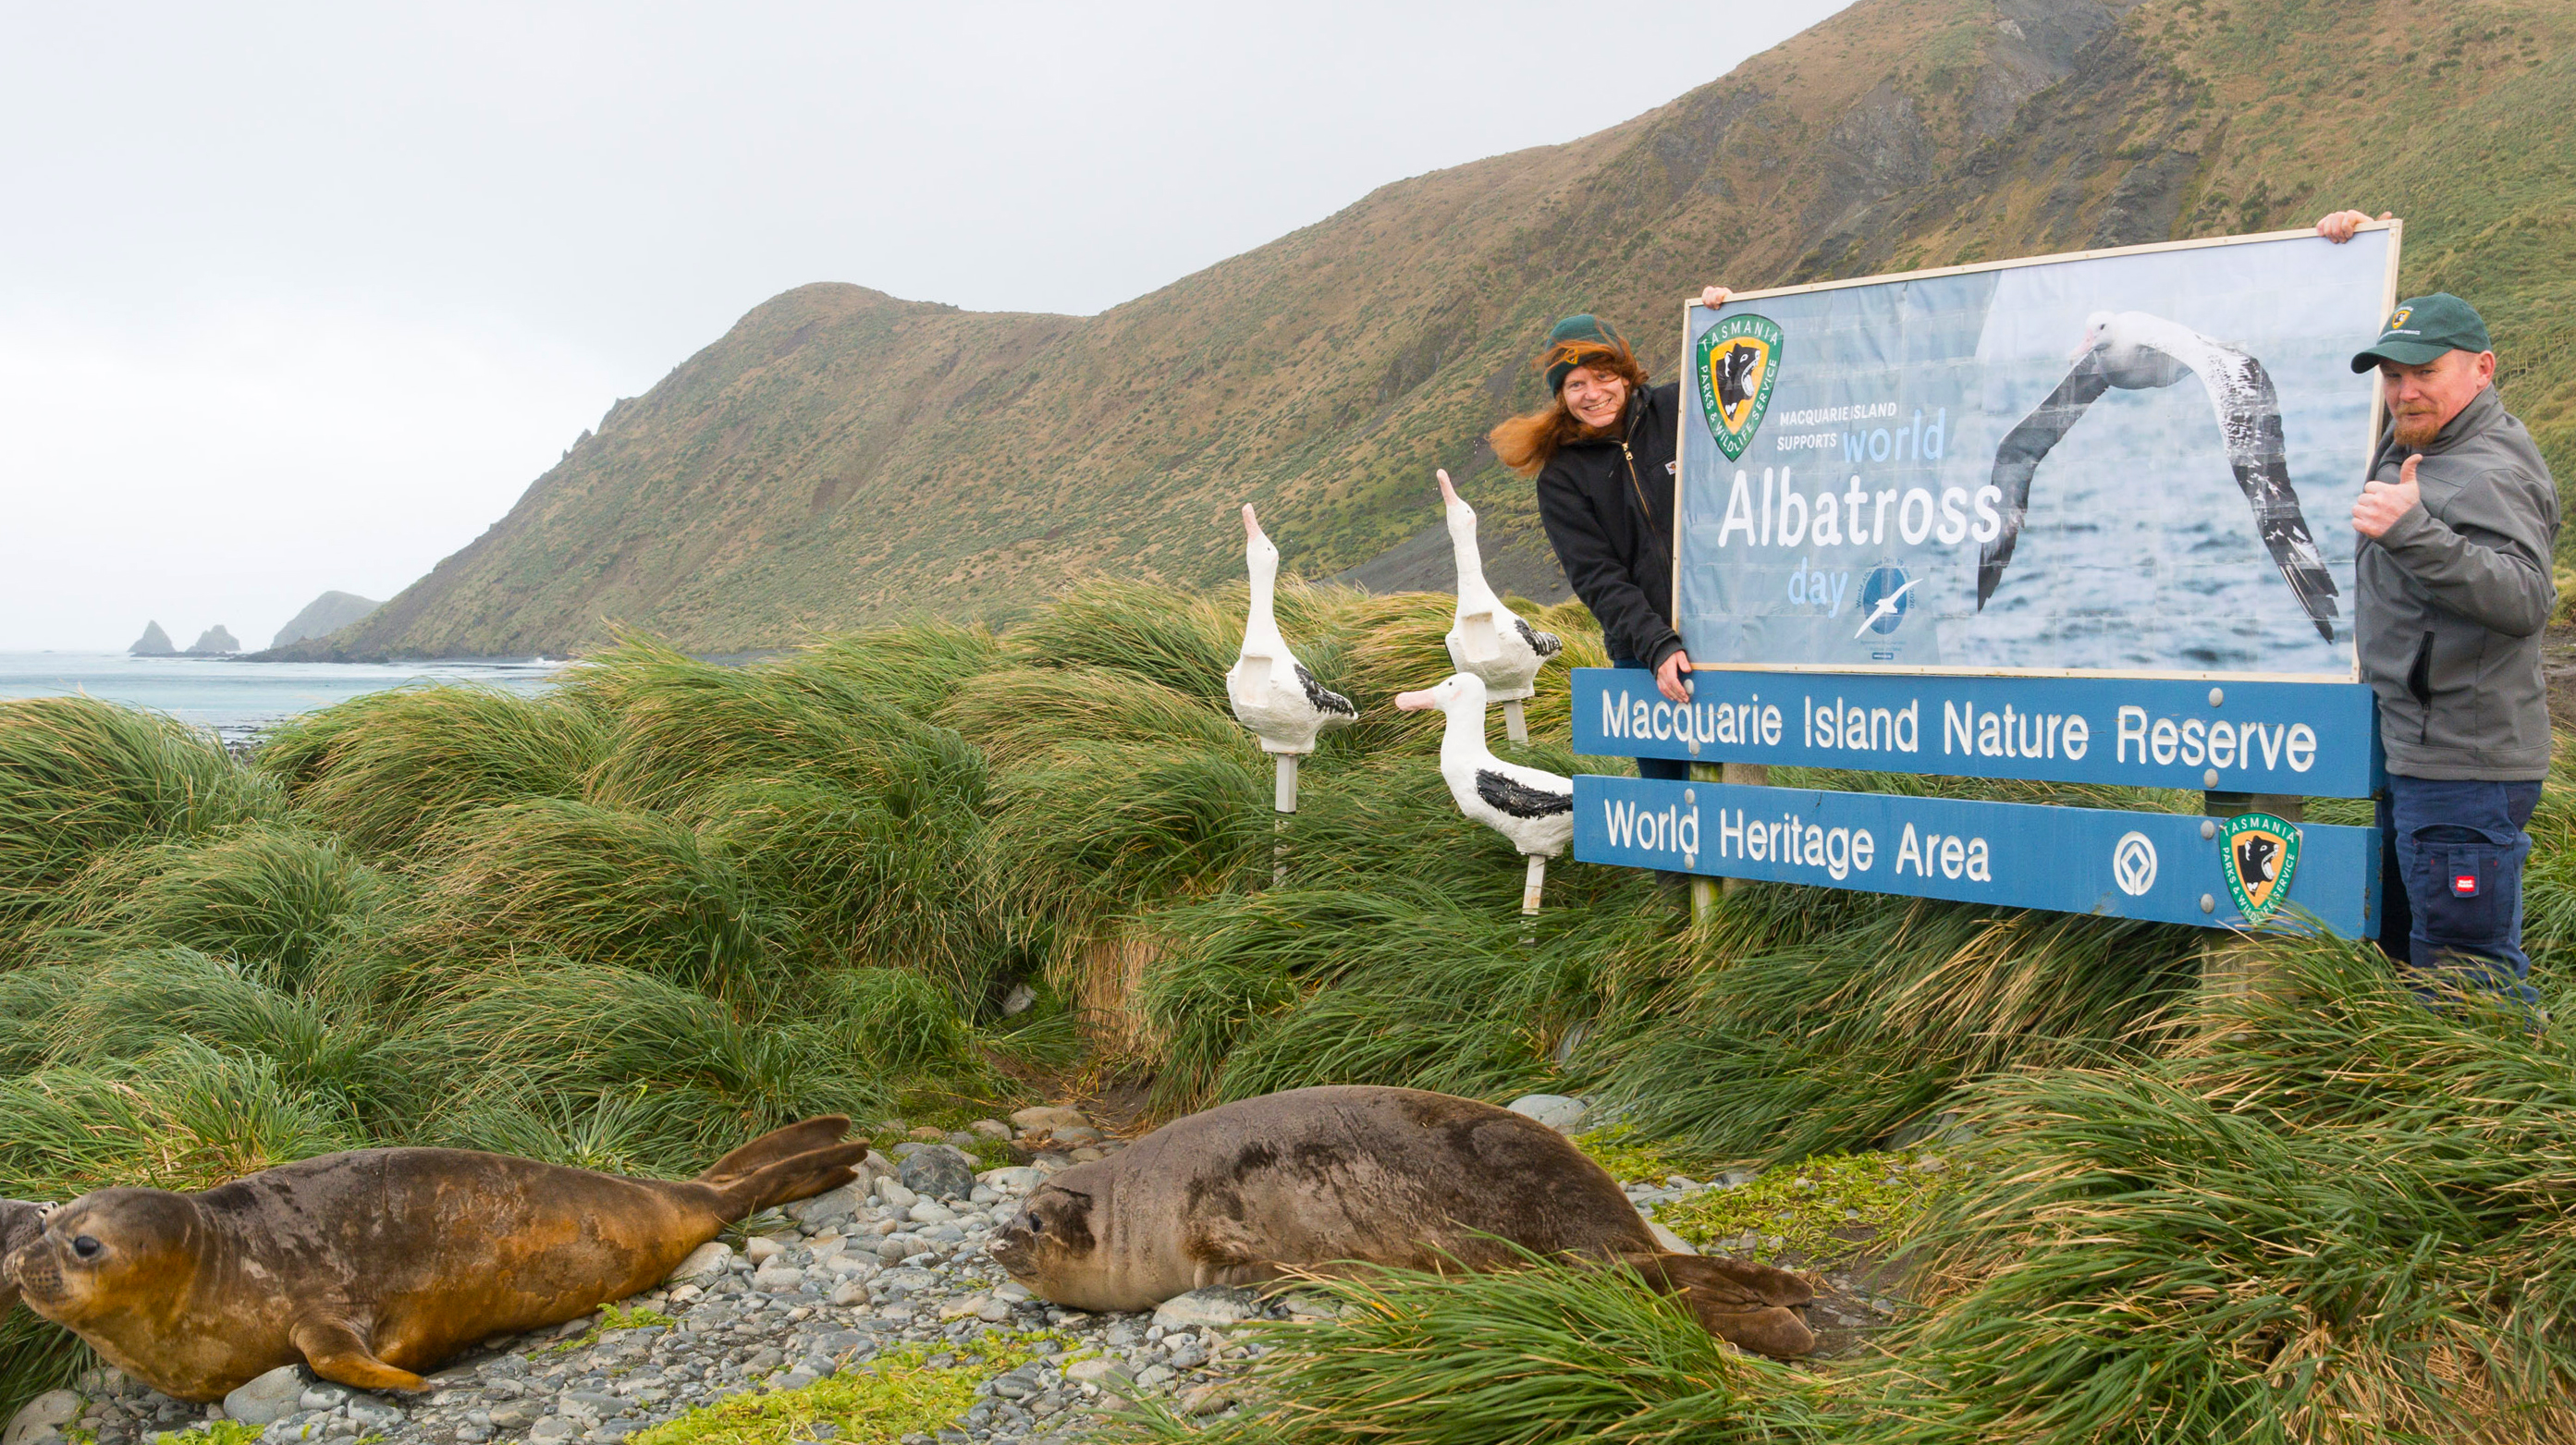 Macca taspws world albatross day banner